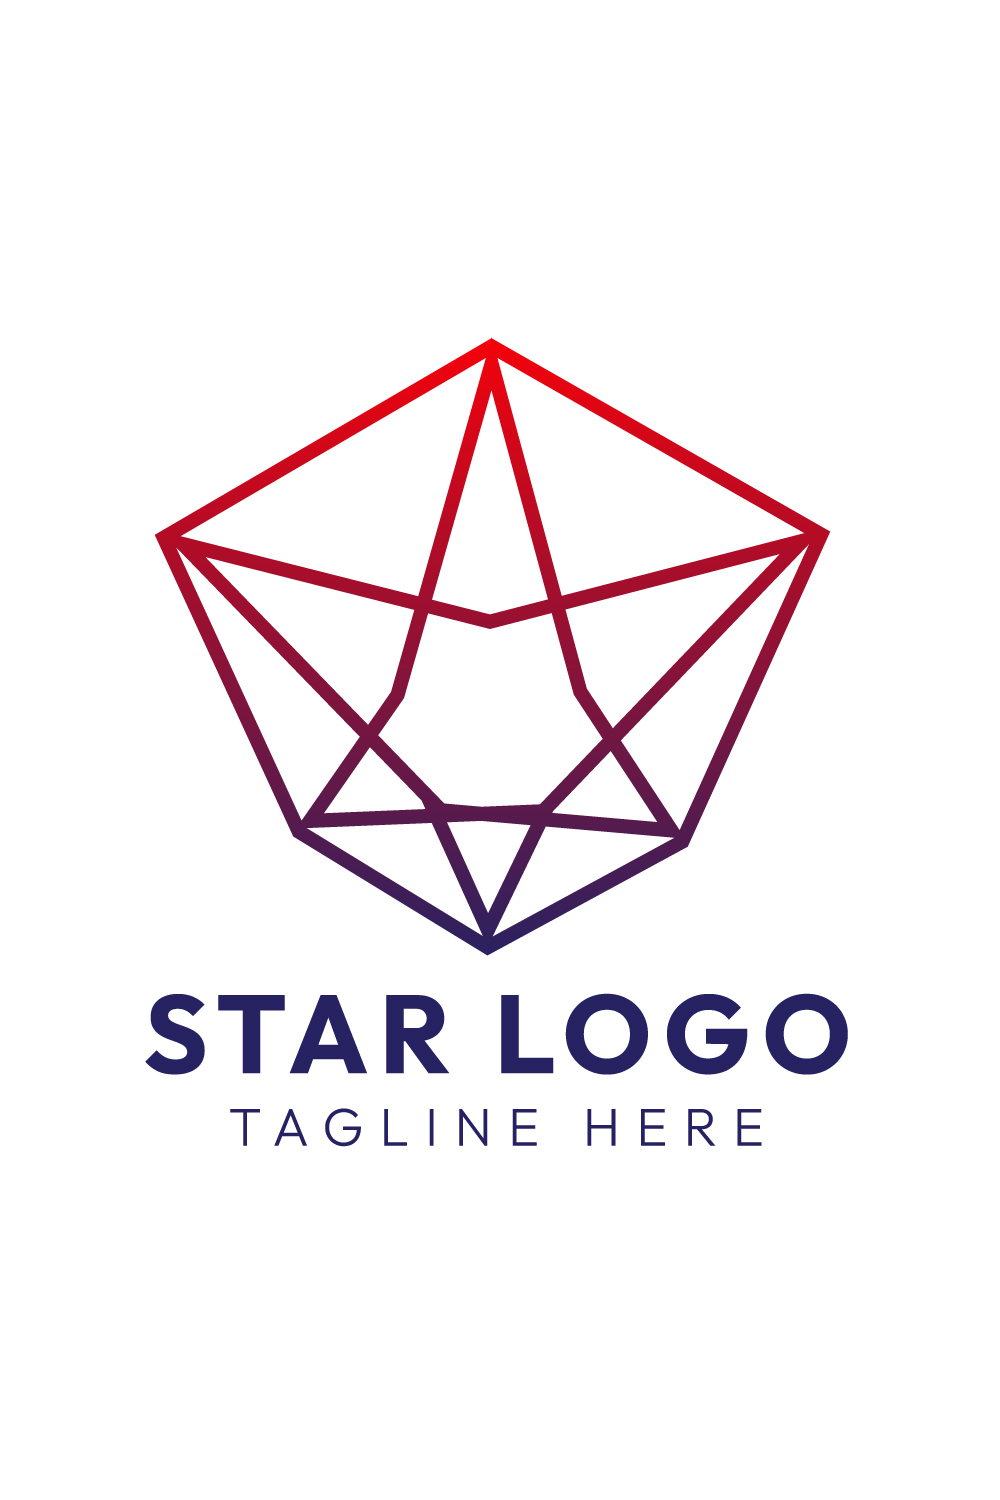 Minimalist Star Logo Design Bundle - Perfect for Modern Brands pinterest preview image.